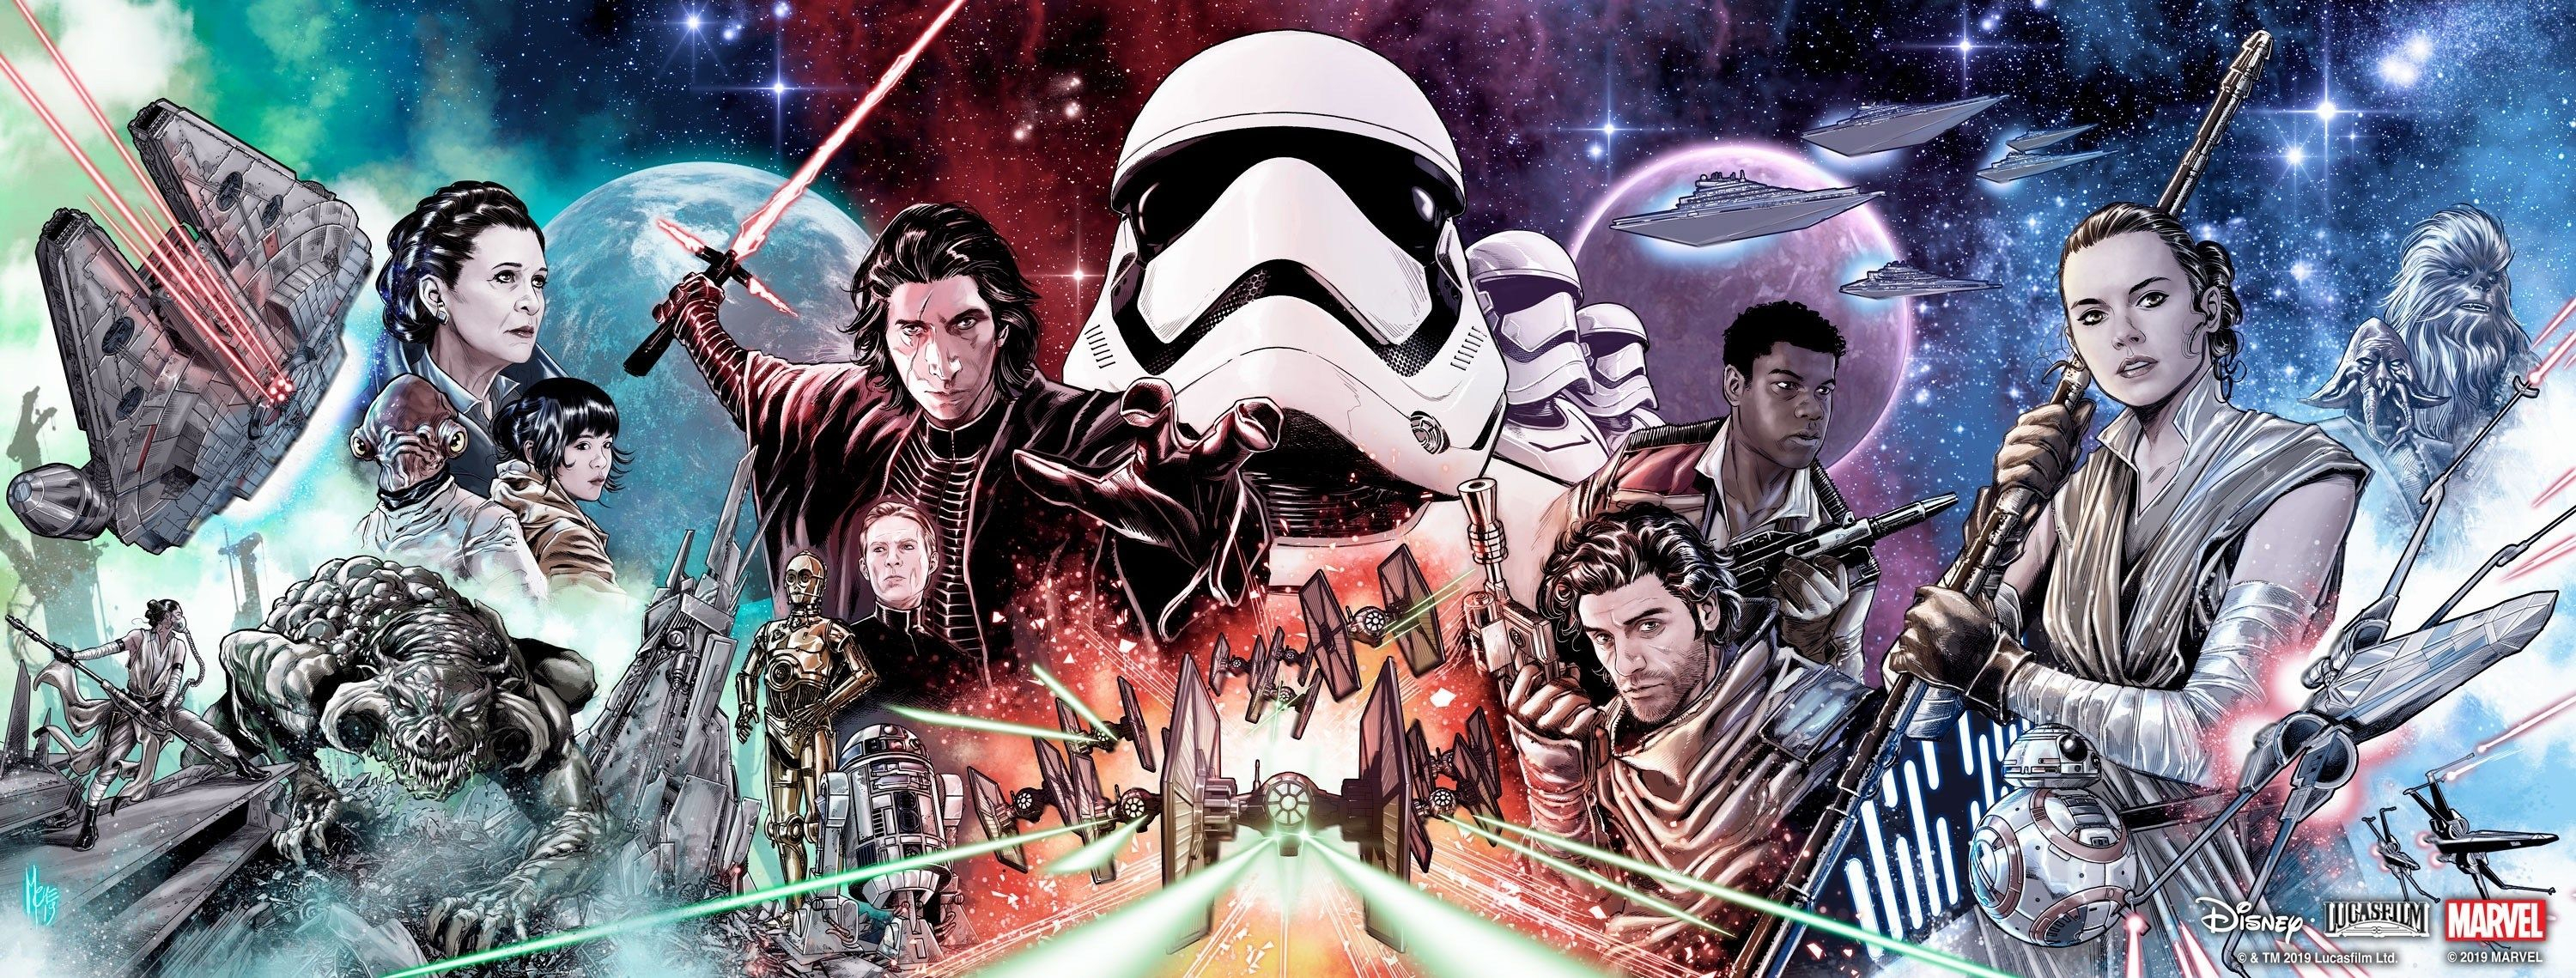 3000x1139 Original Star Wars Wallpapers Top Free Original Star Wars Backgrounds